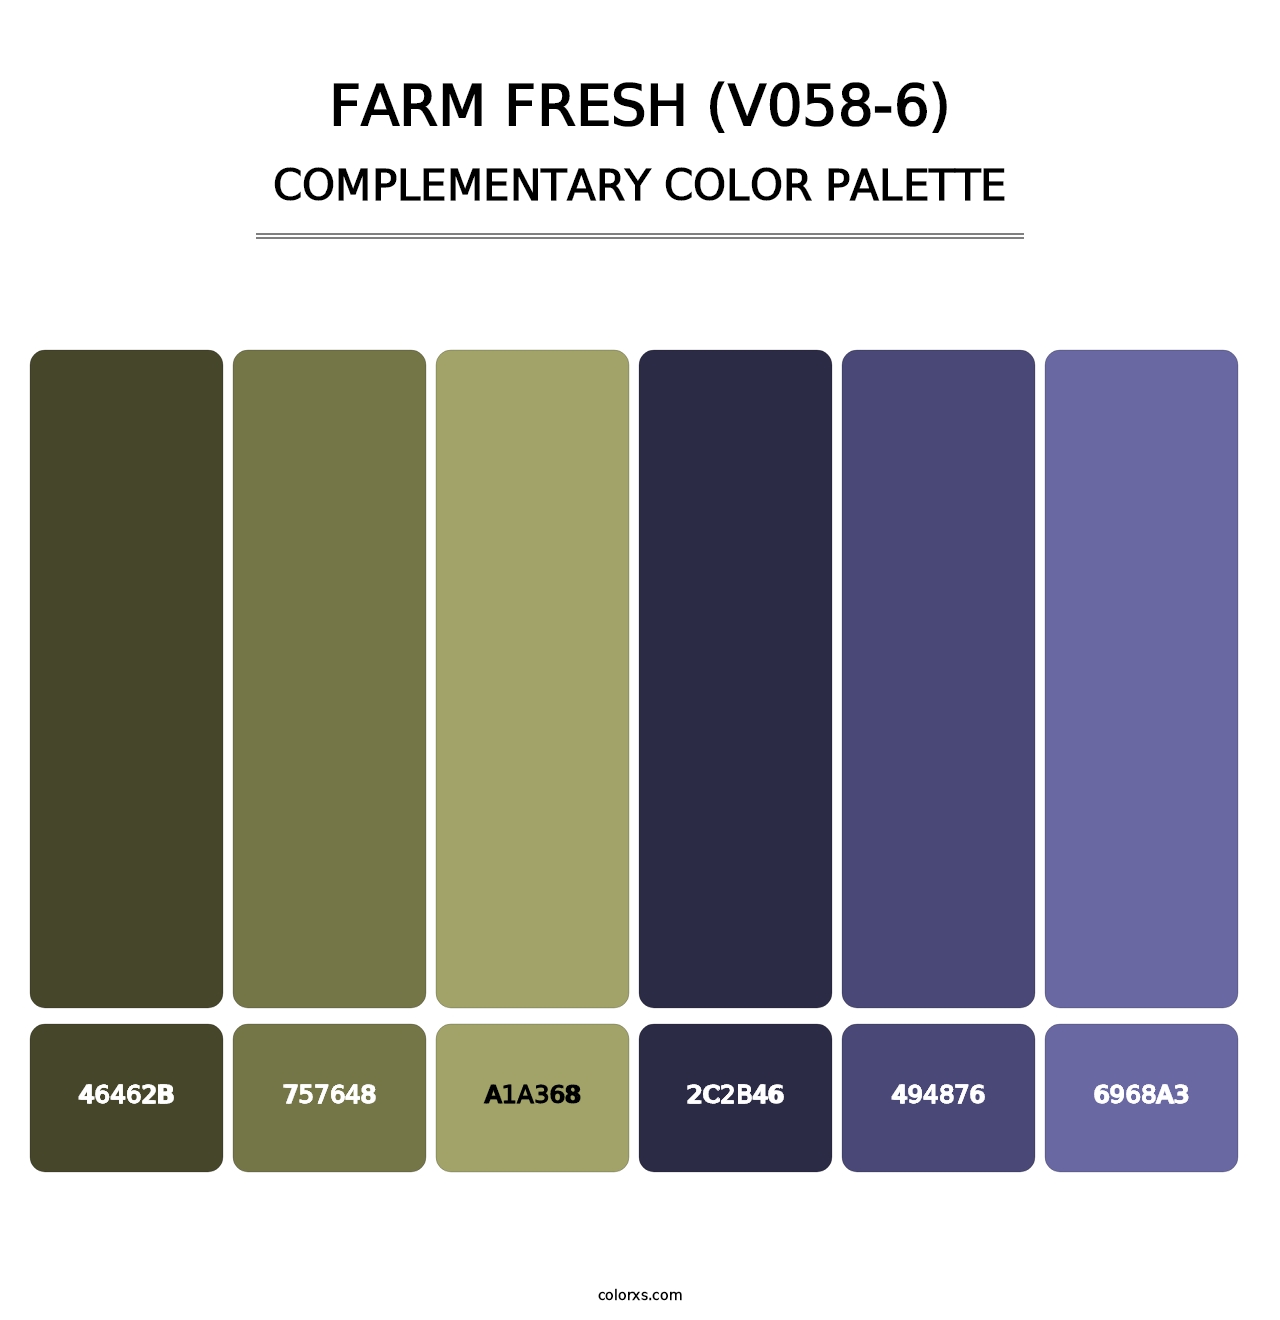 Farm Fresh (V058-6) - Complementary Color Palette